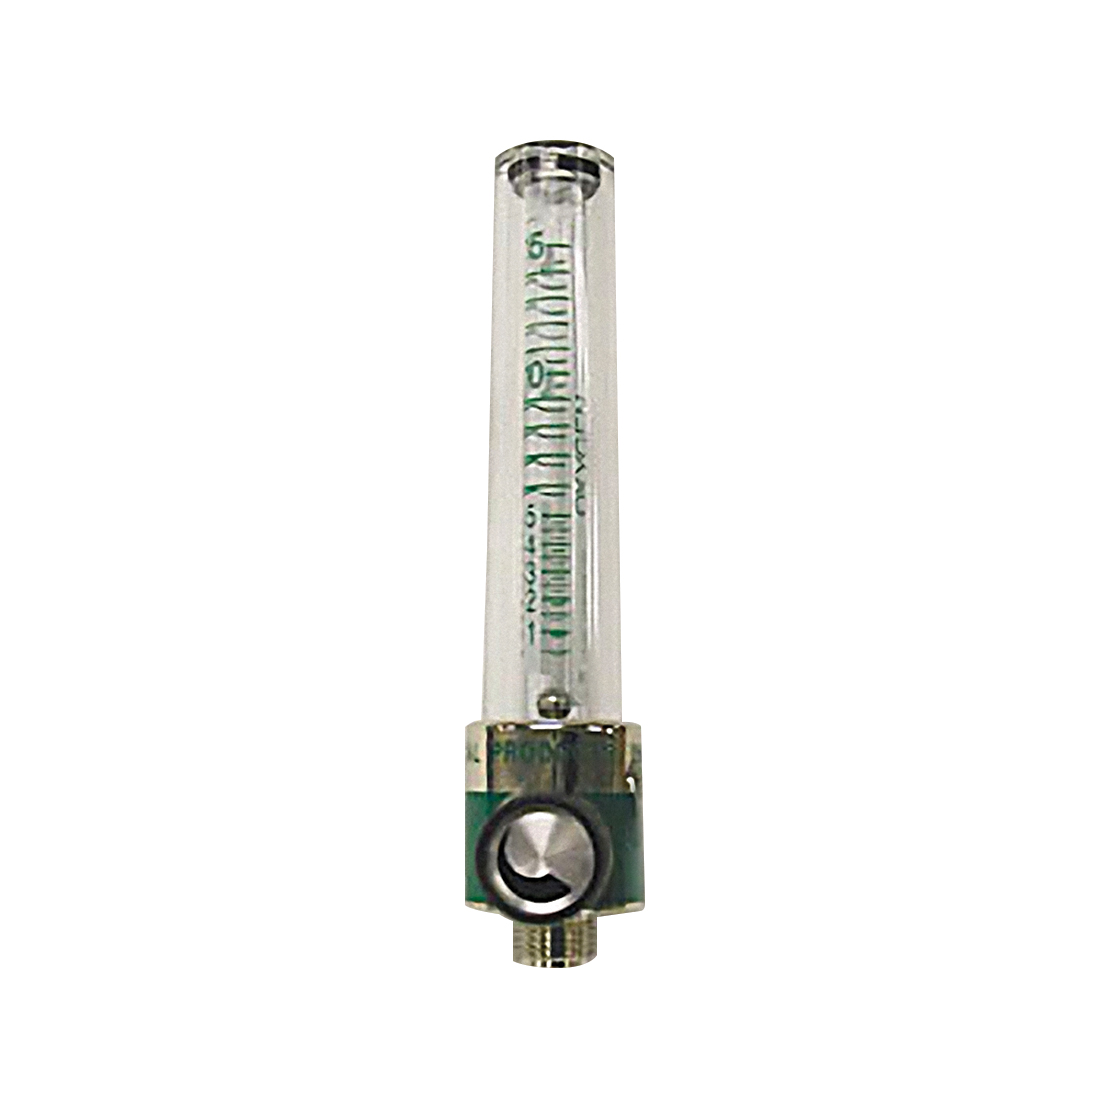 Oxygen Flowmeter 1-15LPM